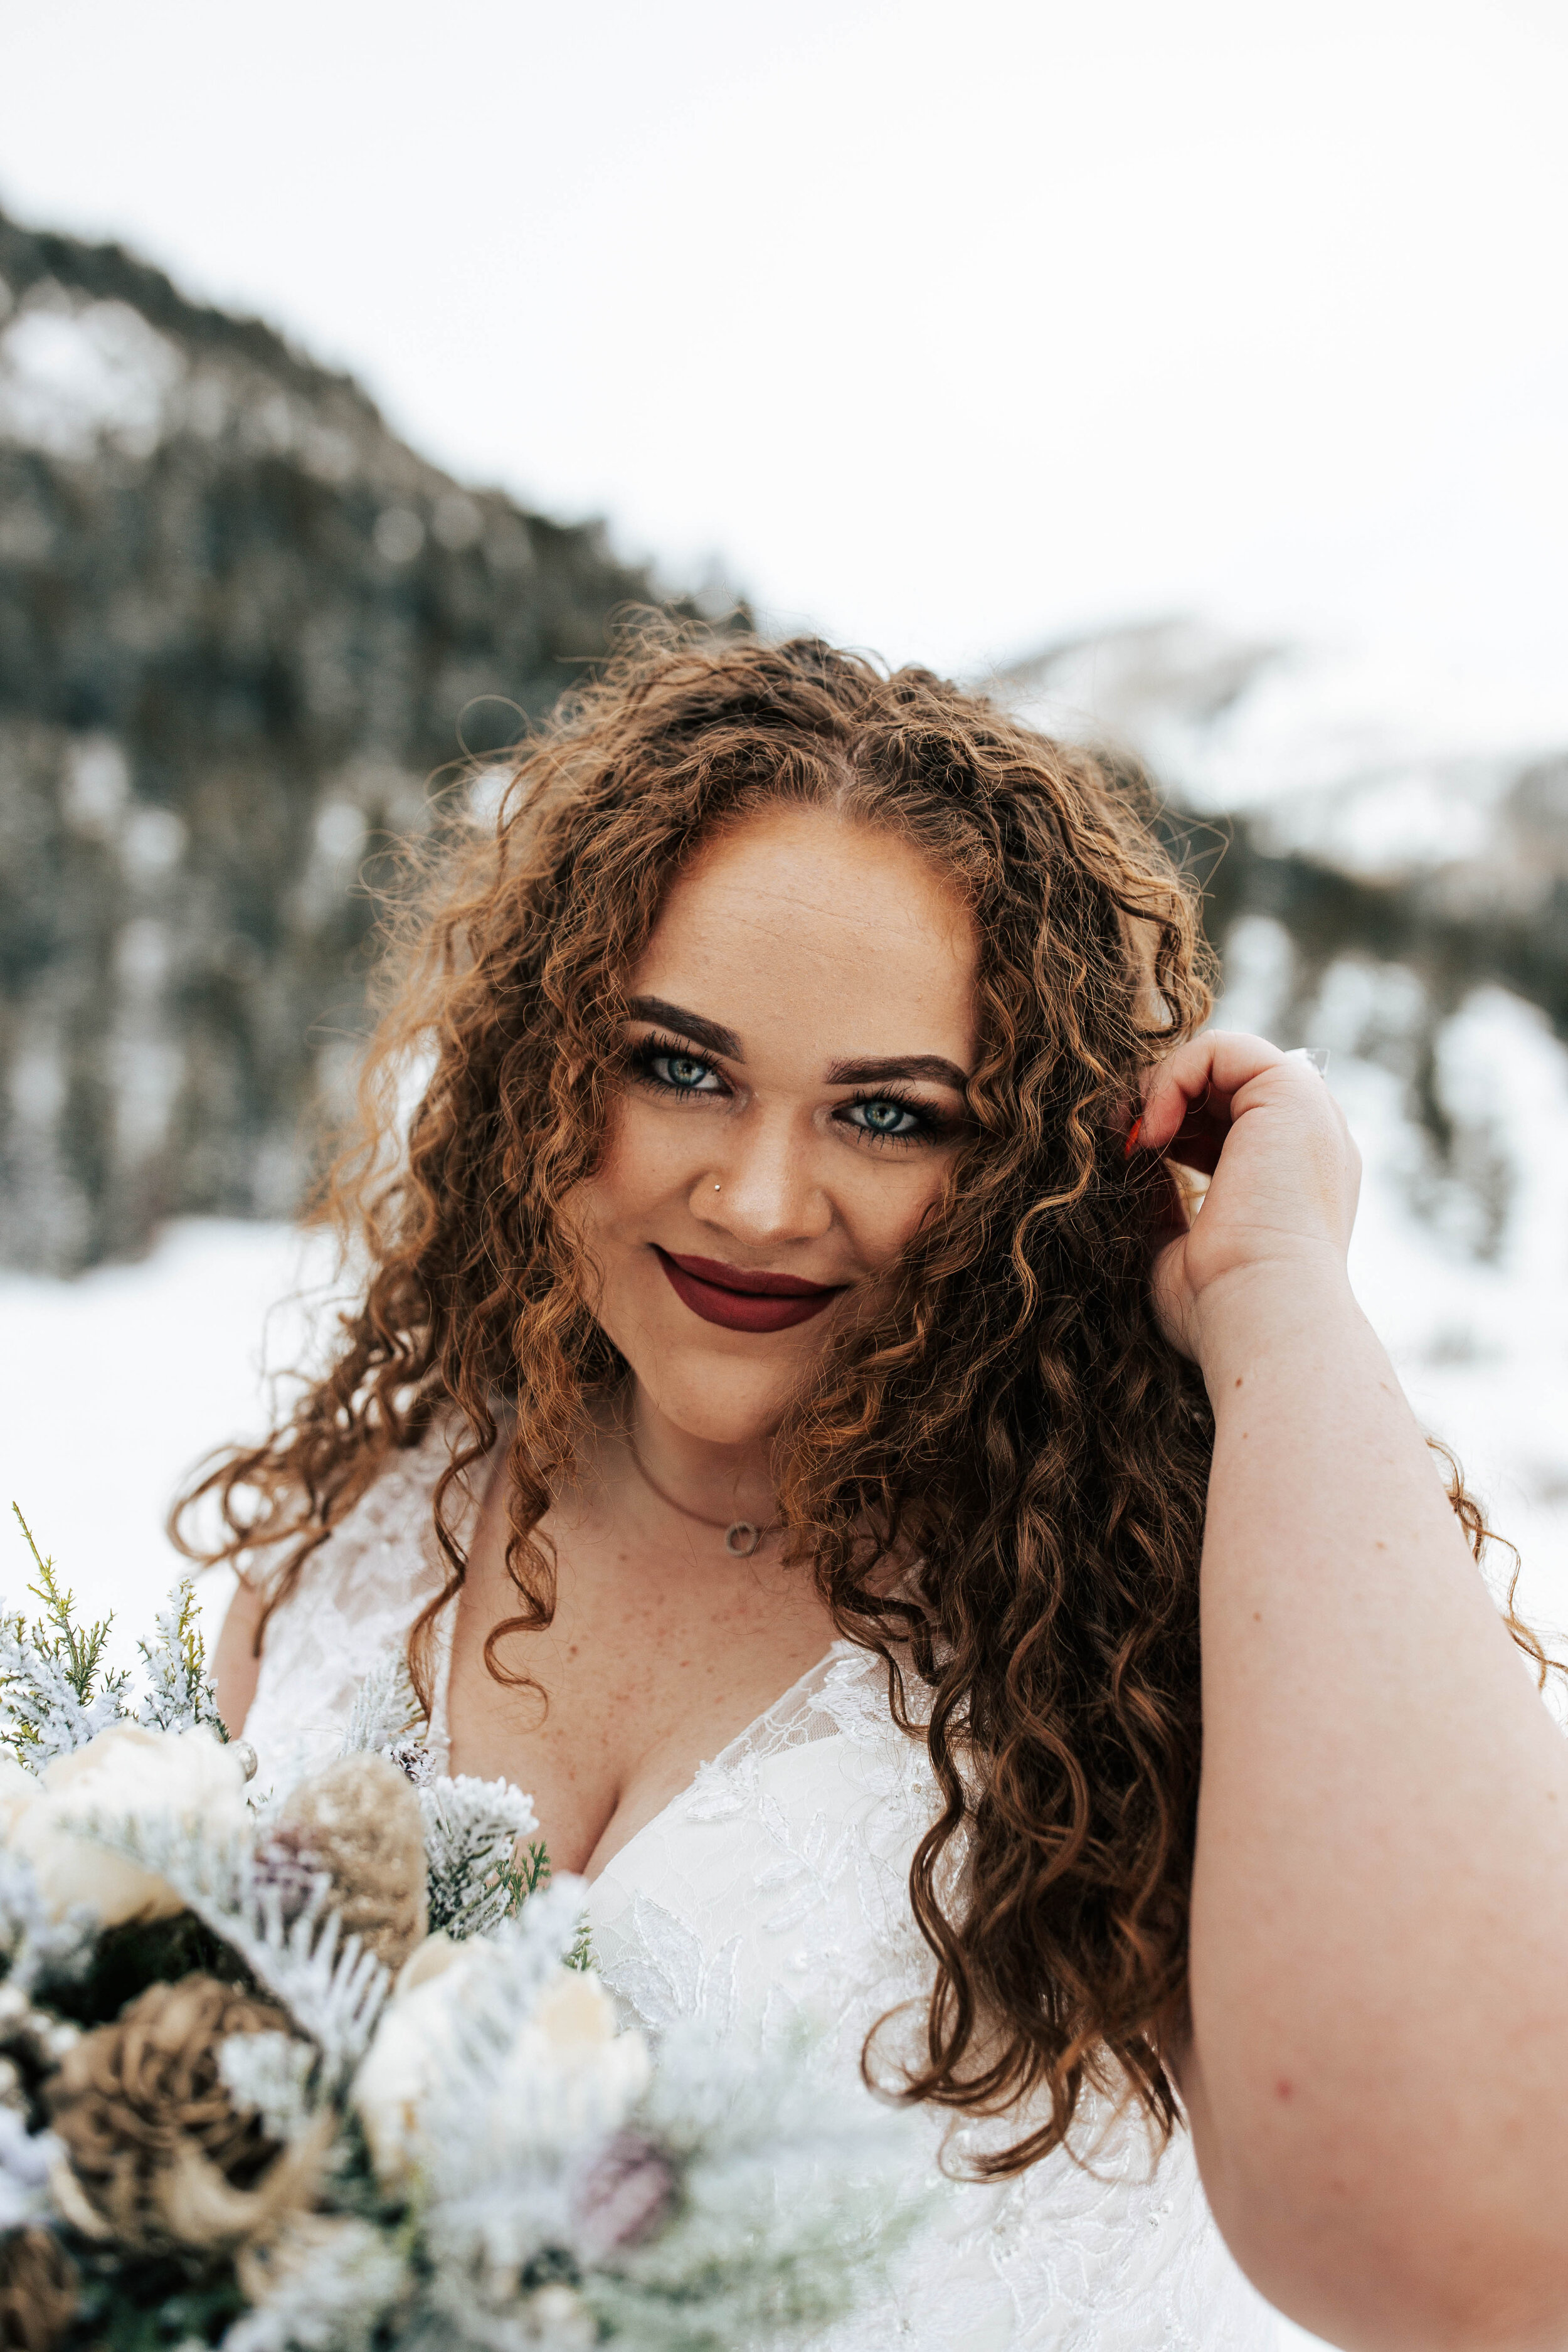 Snowy mountain winter bridals long curly hair big eyes blue florals wedding dress bride #utahphotographer #weddingphotographer #bride #bridals wedding dress